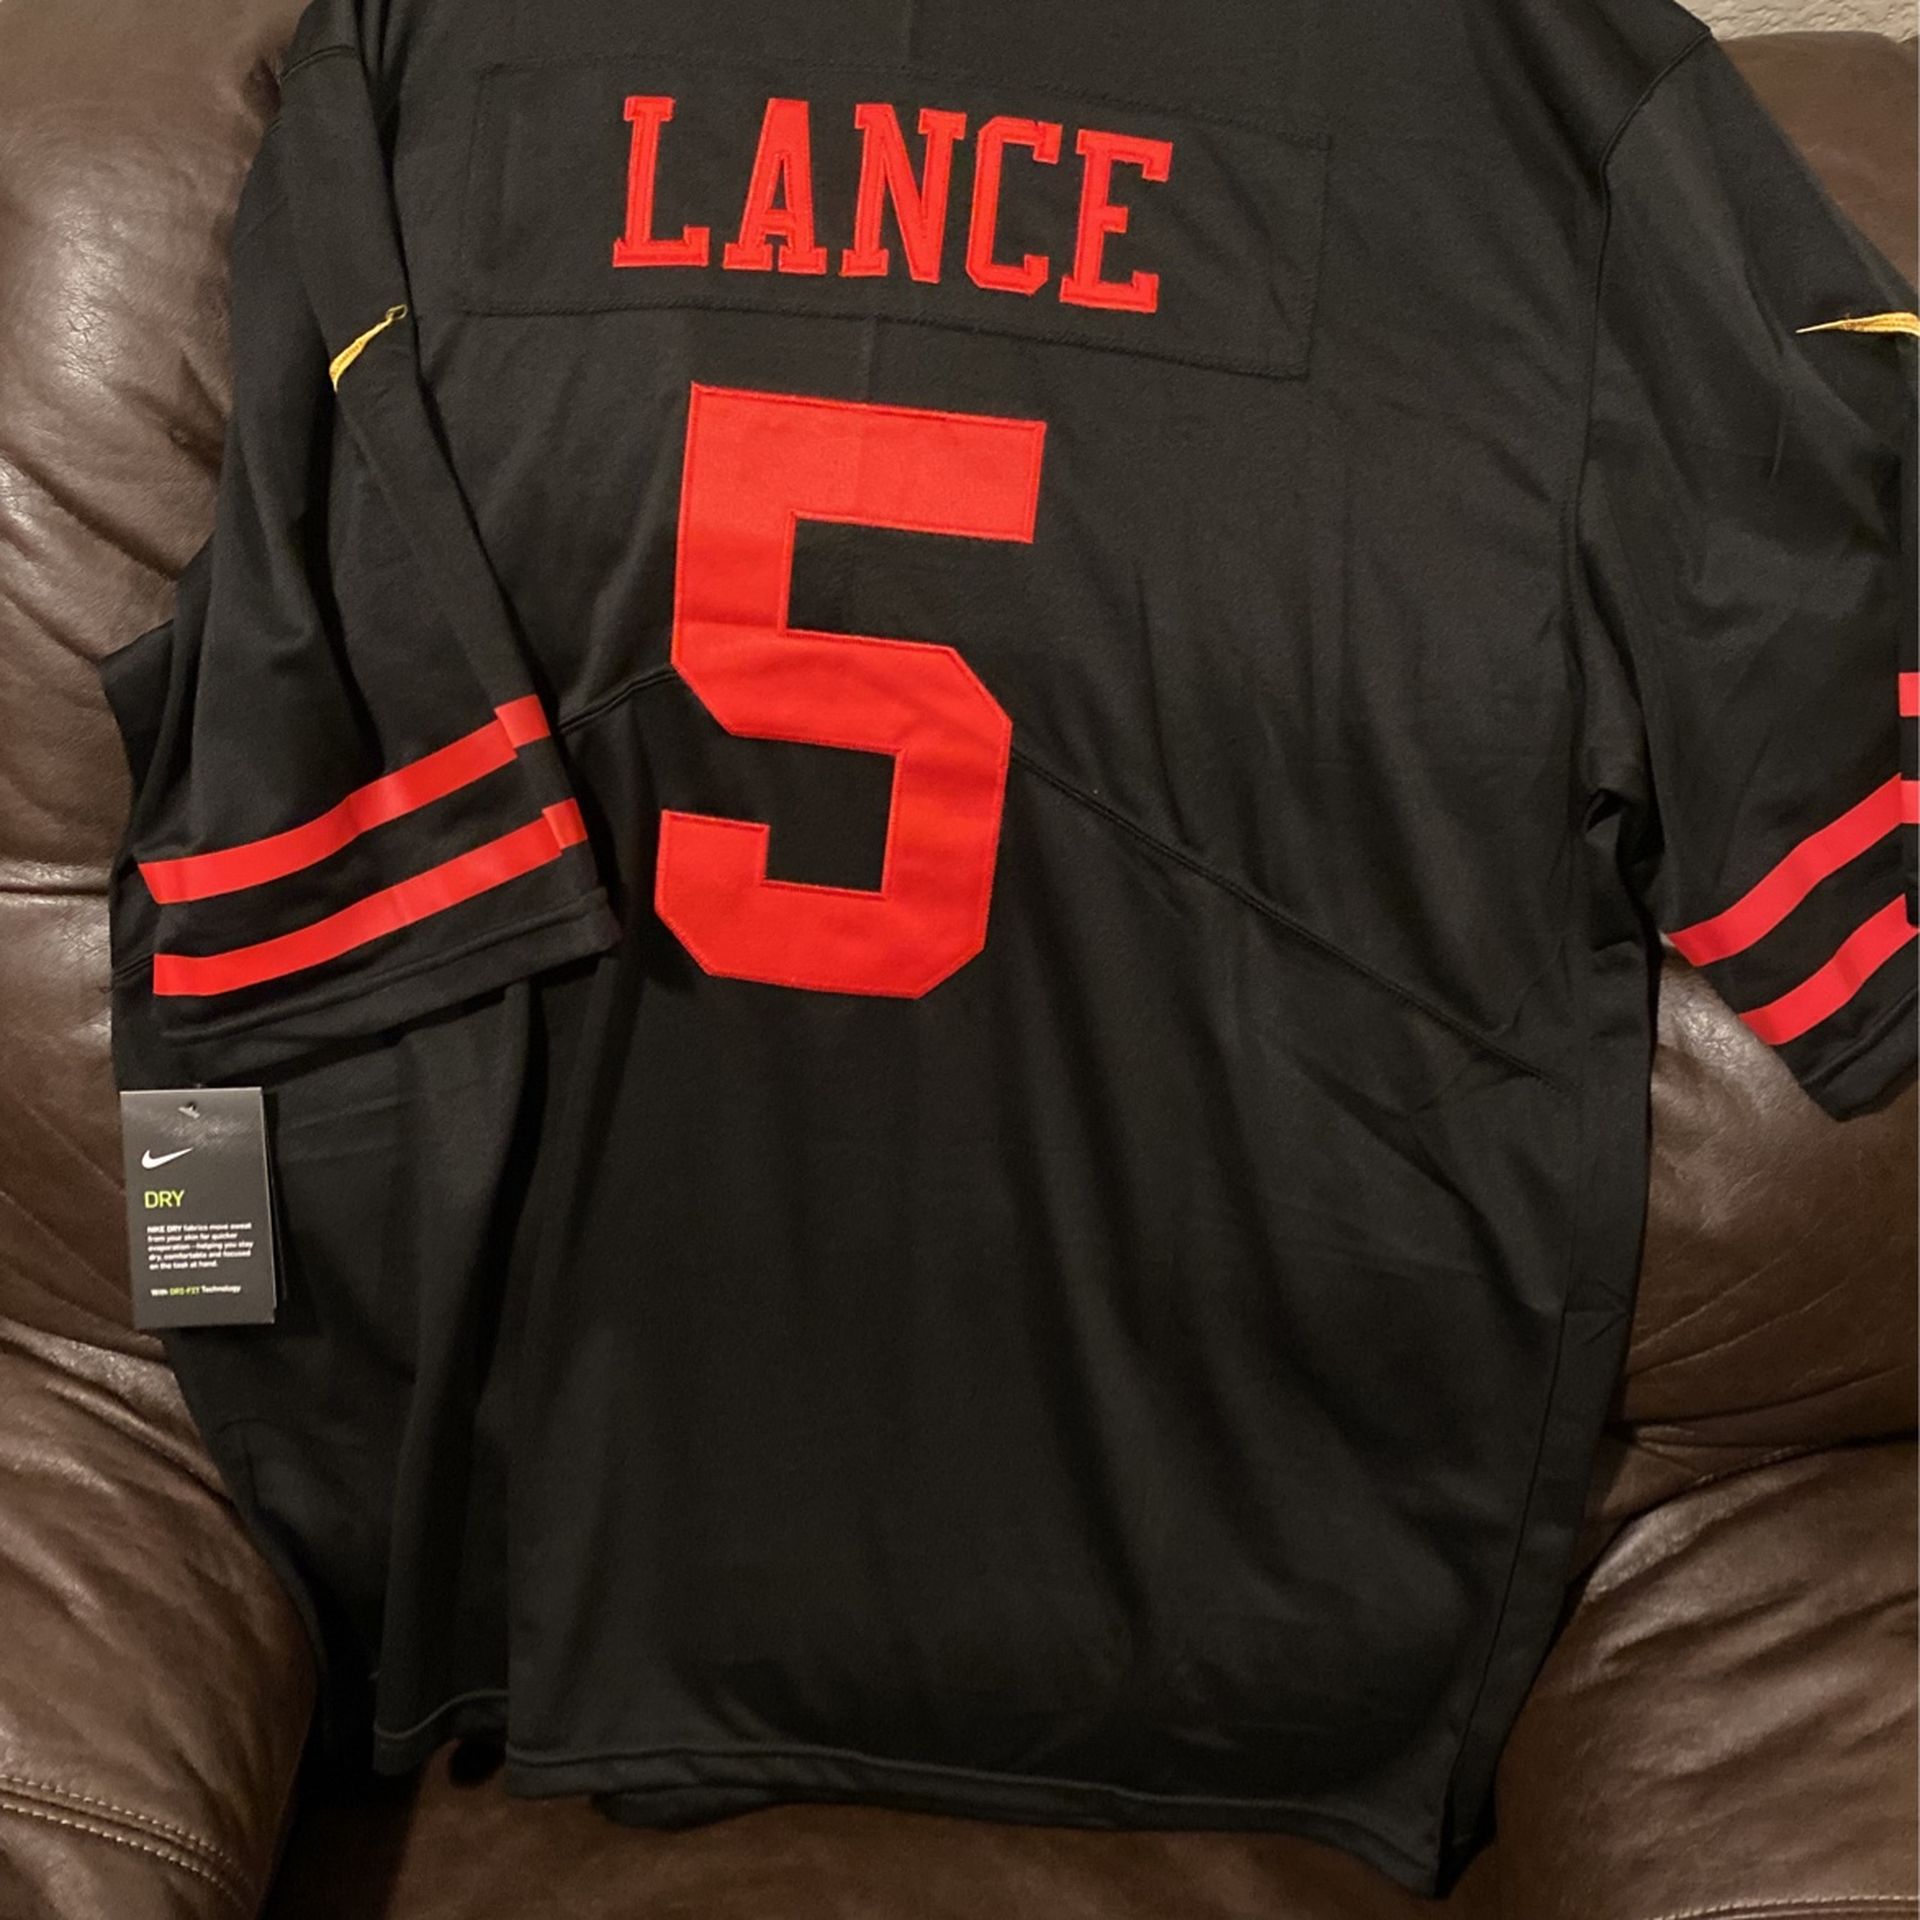 NFL Jersey 49ers Lance